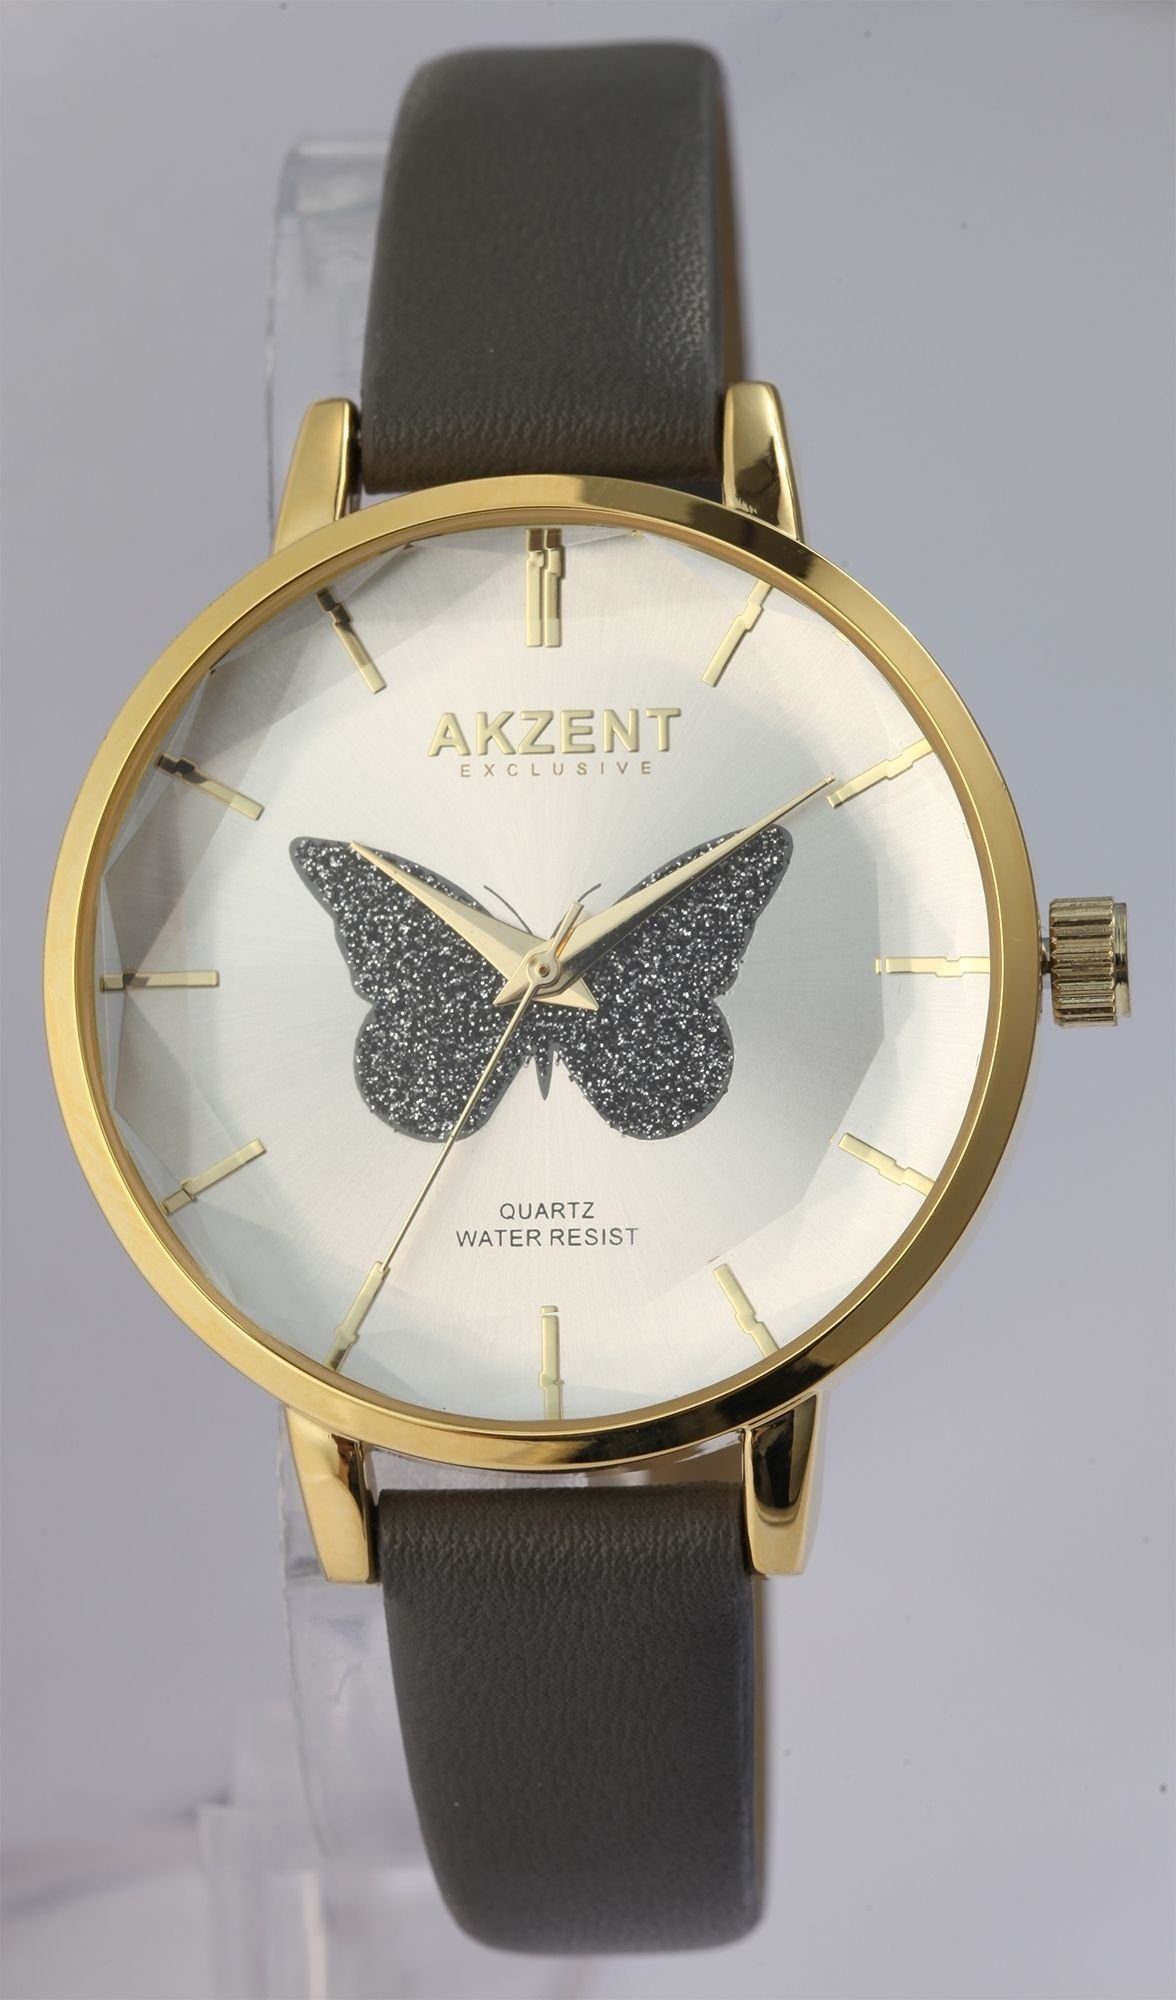 AKZENT Quarzuhr Schmetterling Lederimitationsband mit Fly Armbanduhr Damen goldfarbig